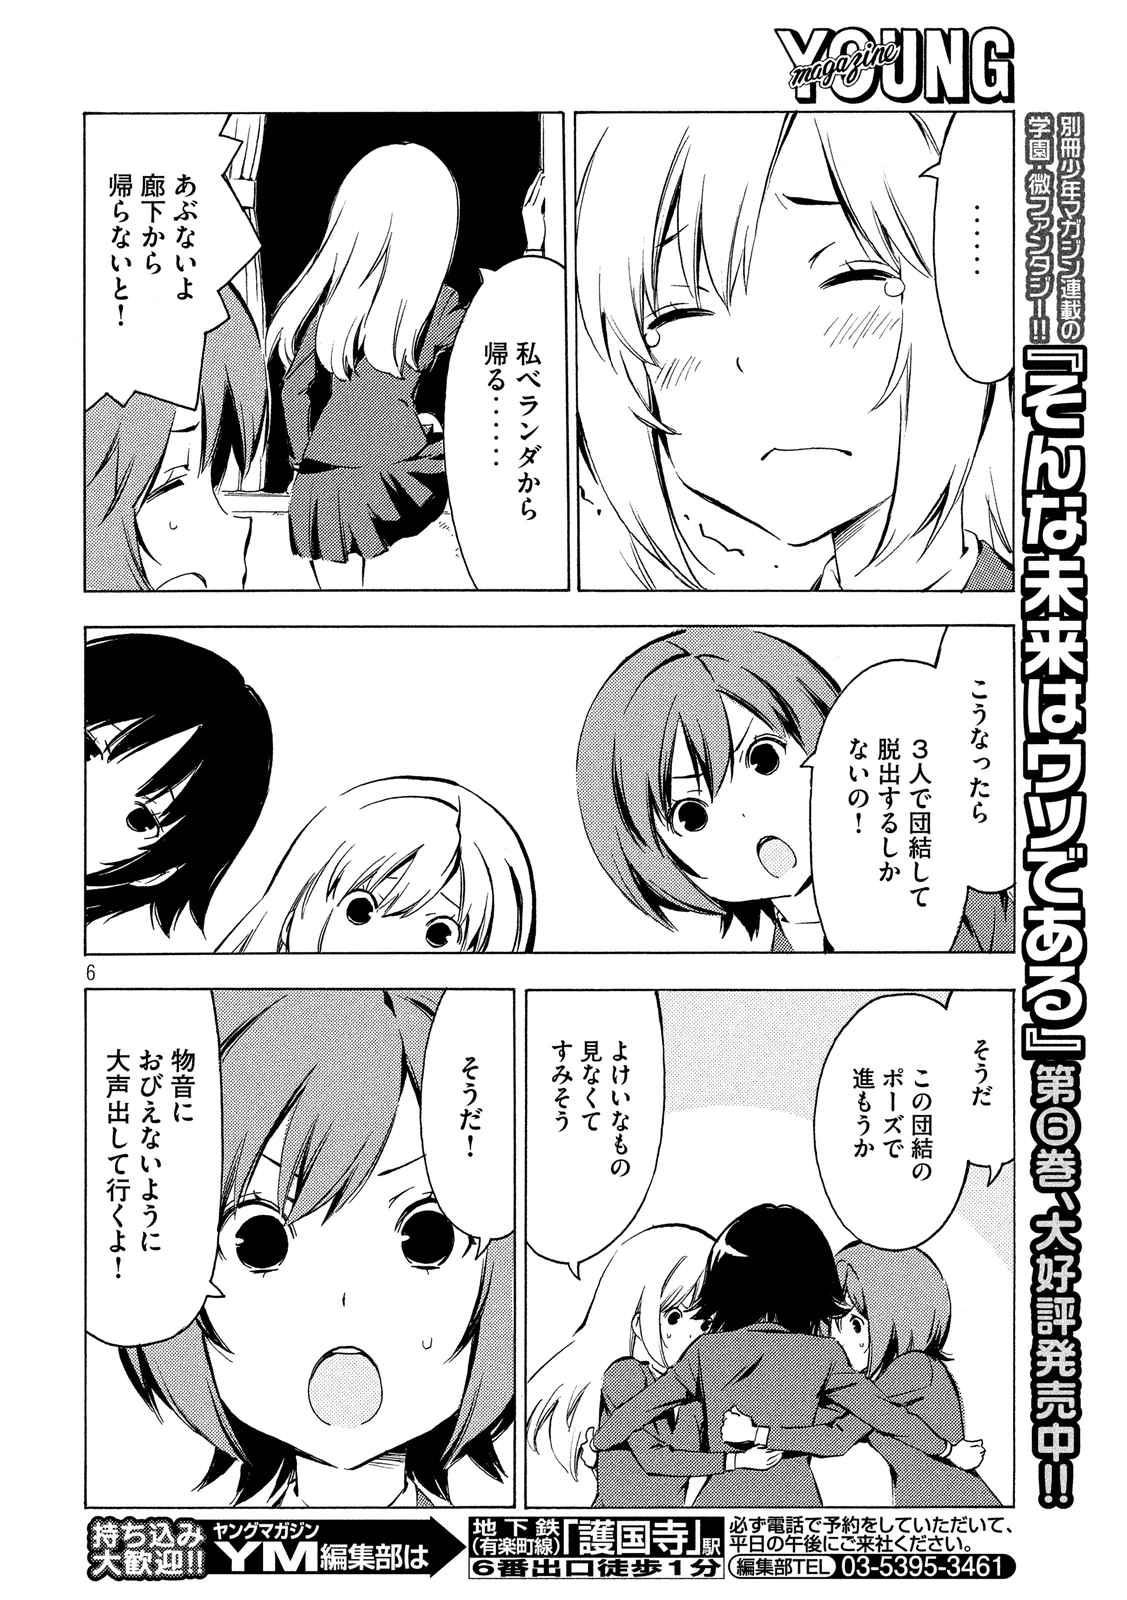 Minami-ke - Chapter 309 - Page 6